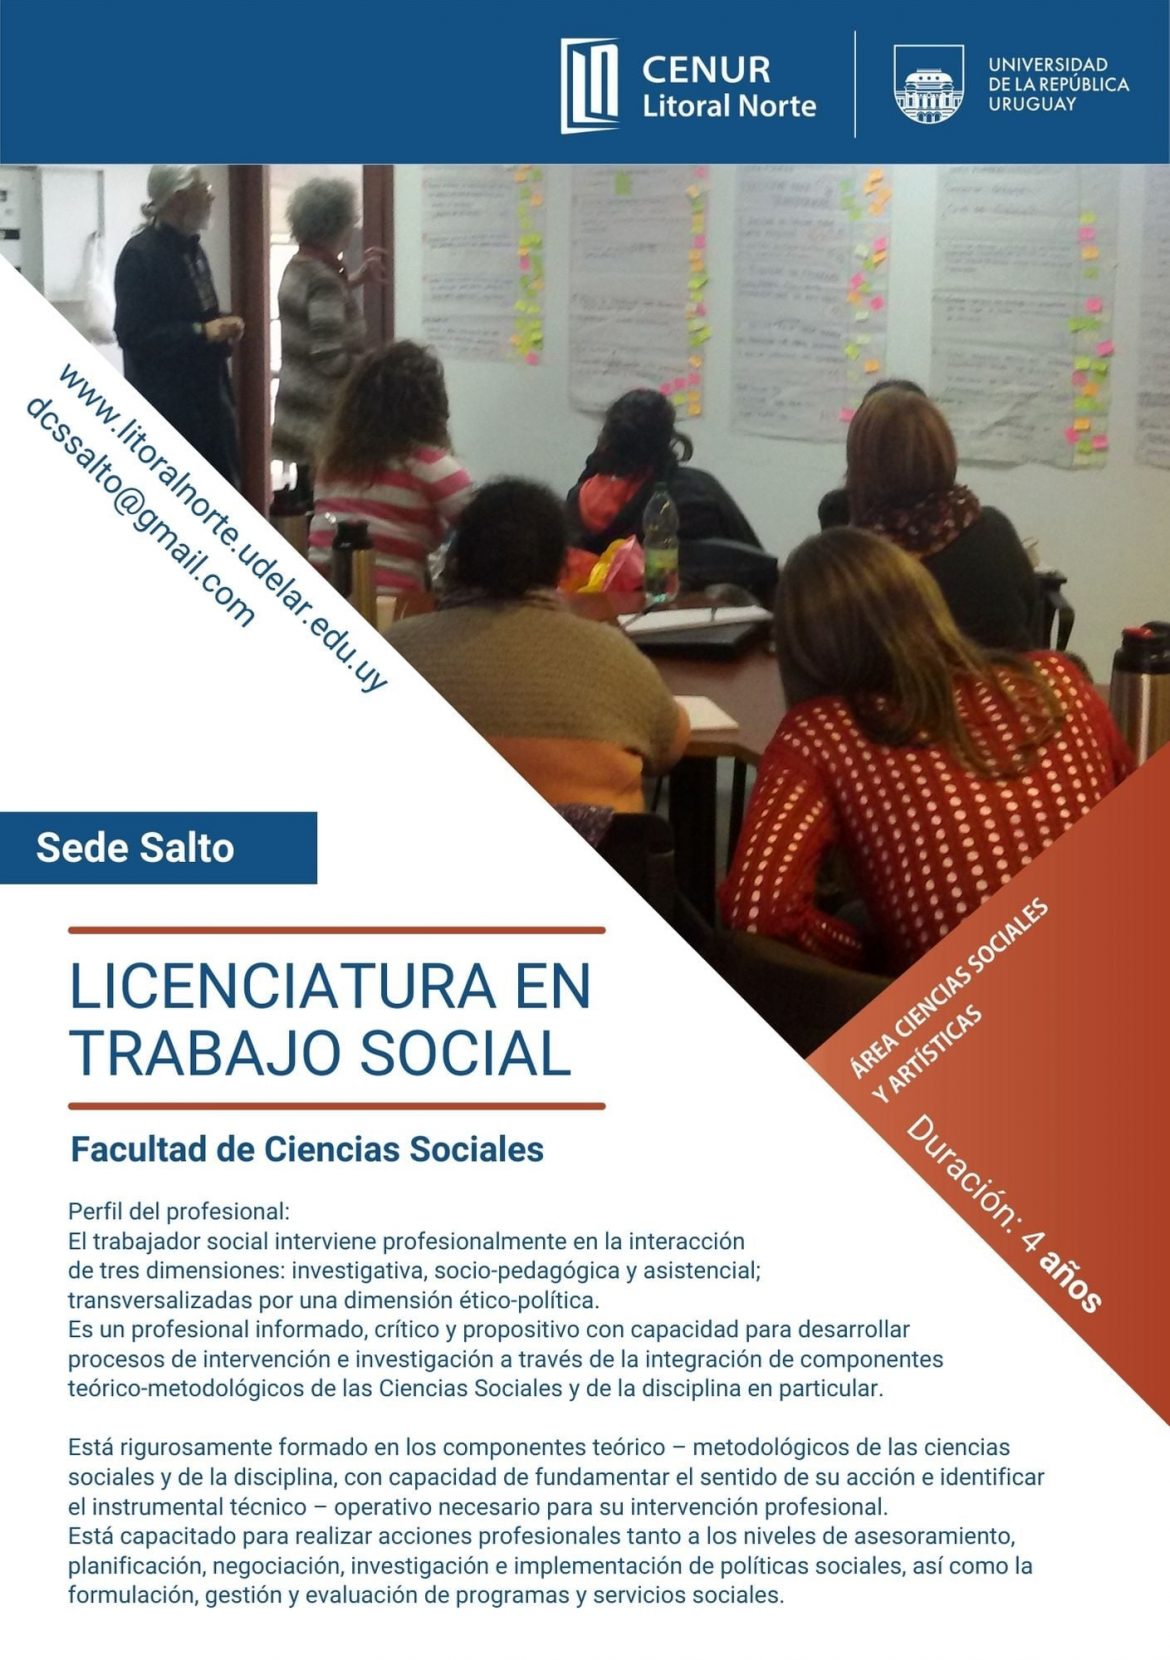 Cenur Litoral Norte sede Salto: Oferta Educativa